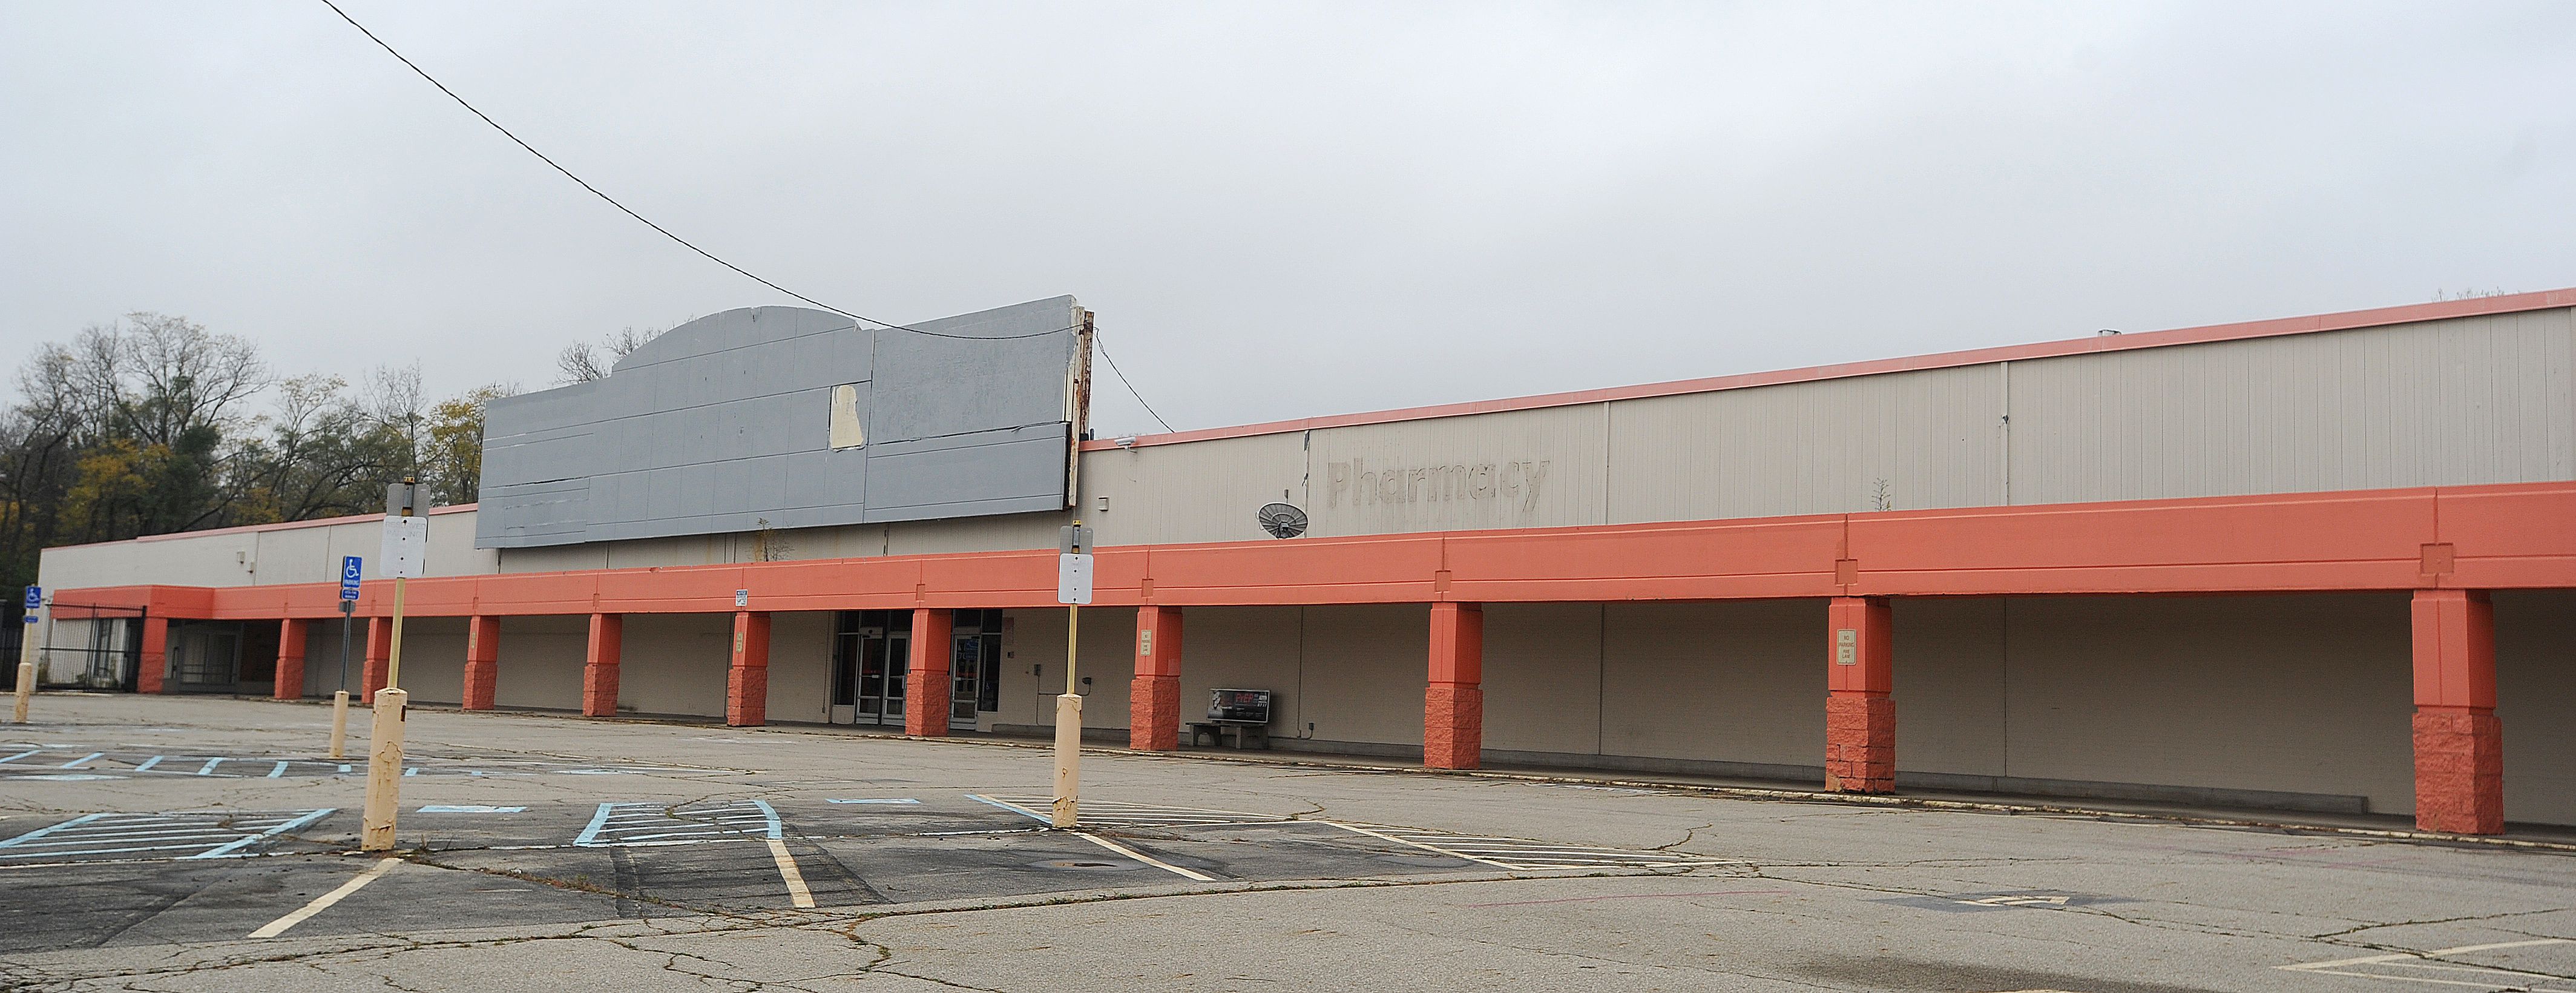 Kroger releases details for new store replacing former Kmart in Riverside